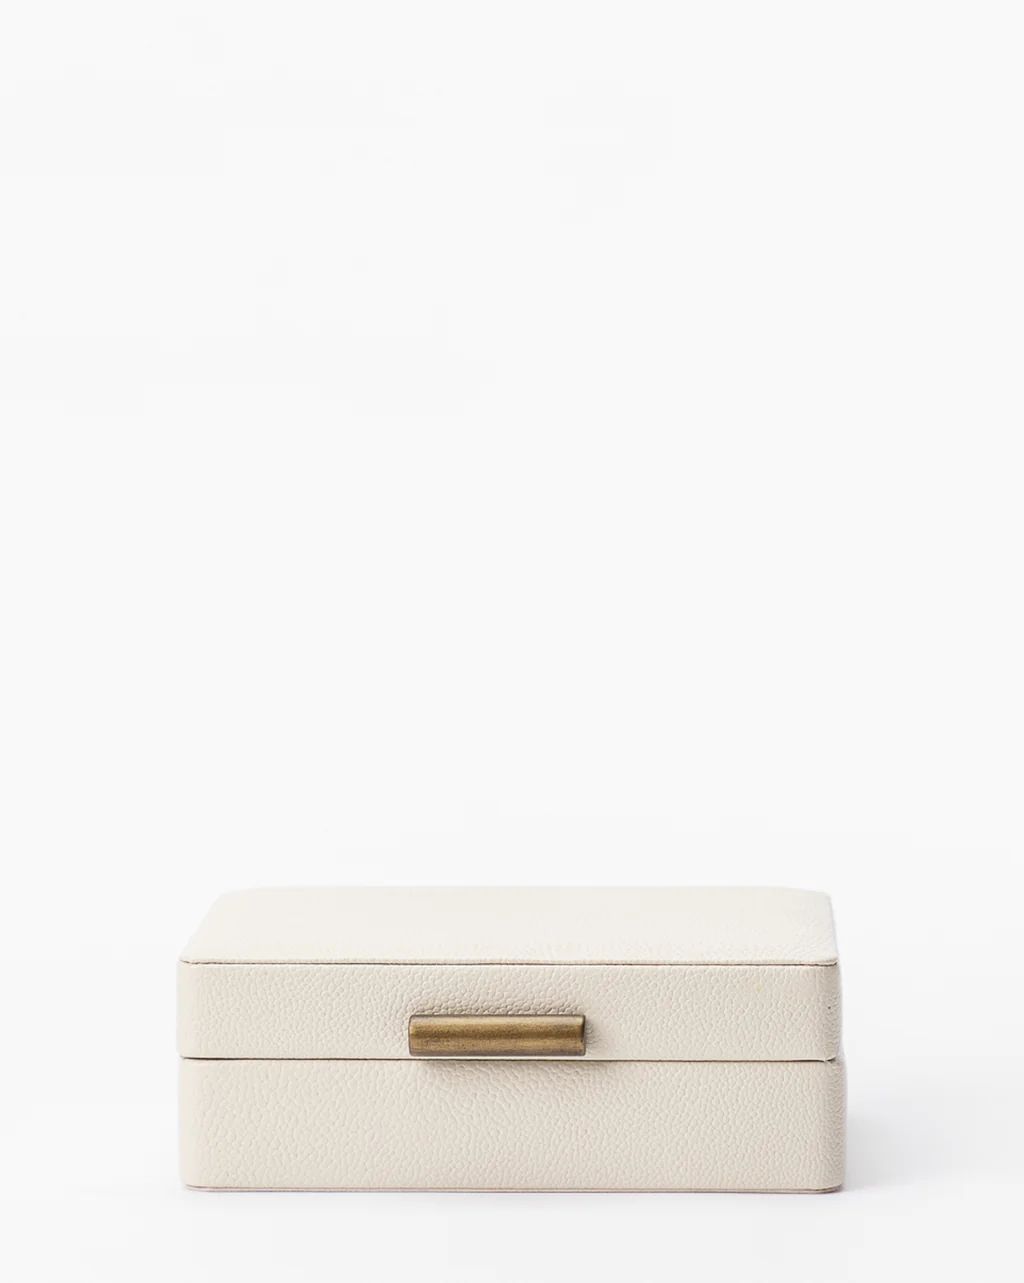 White Shagreen Box | McGee & Co.